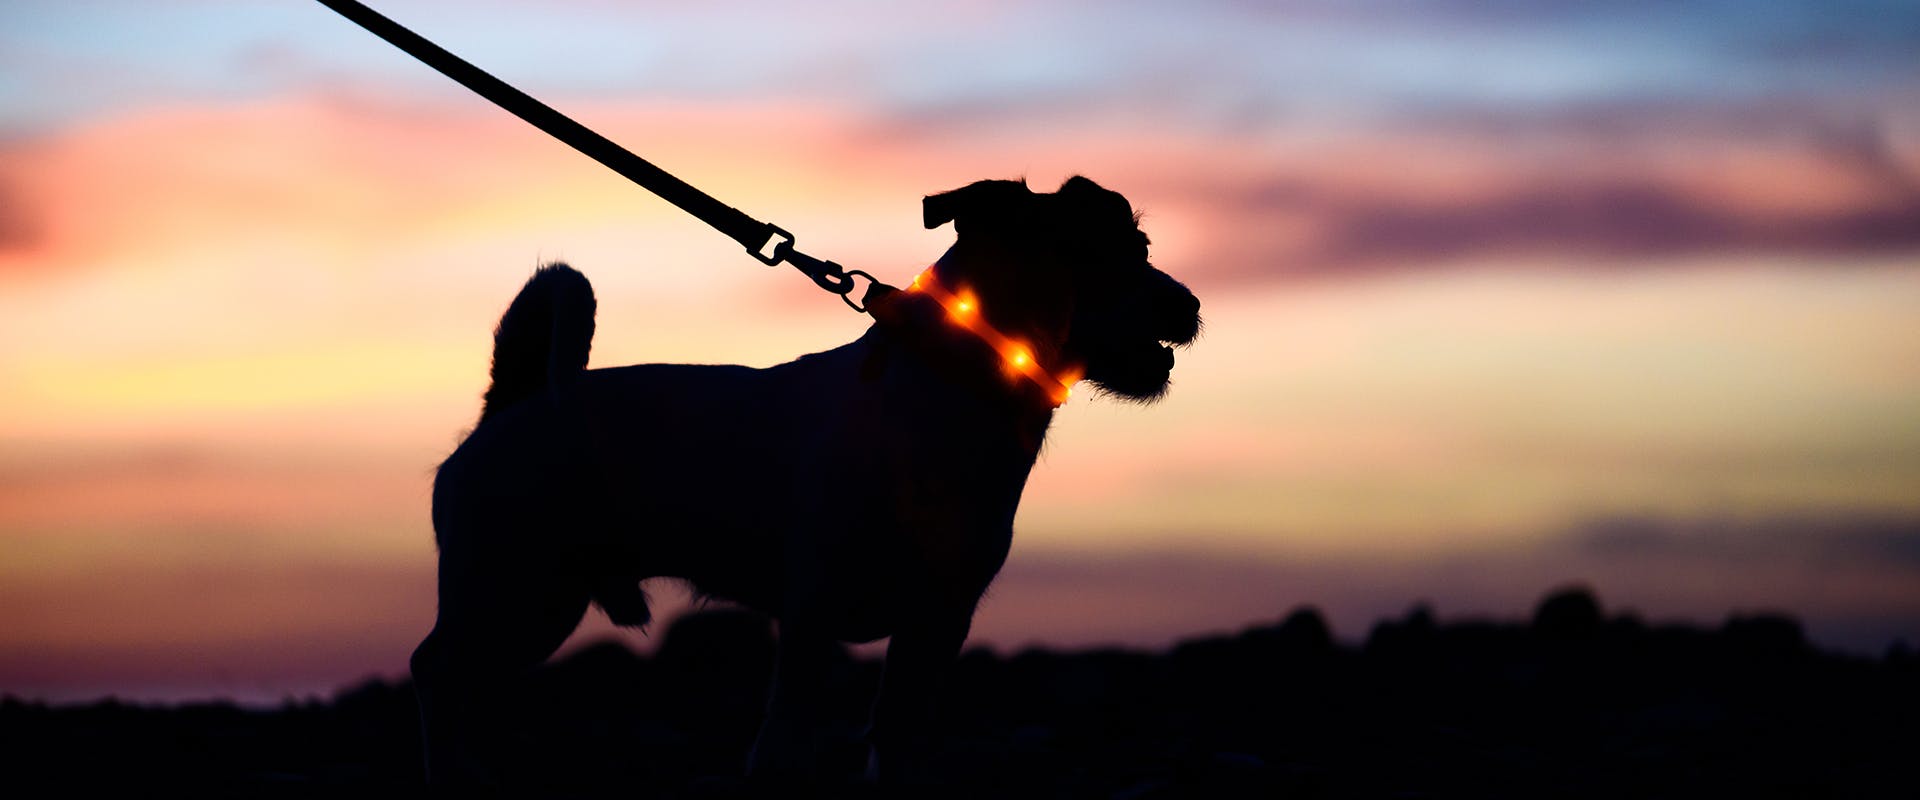 A dog at sunset wearing a lighted dog collar